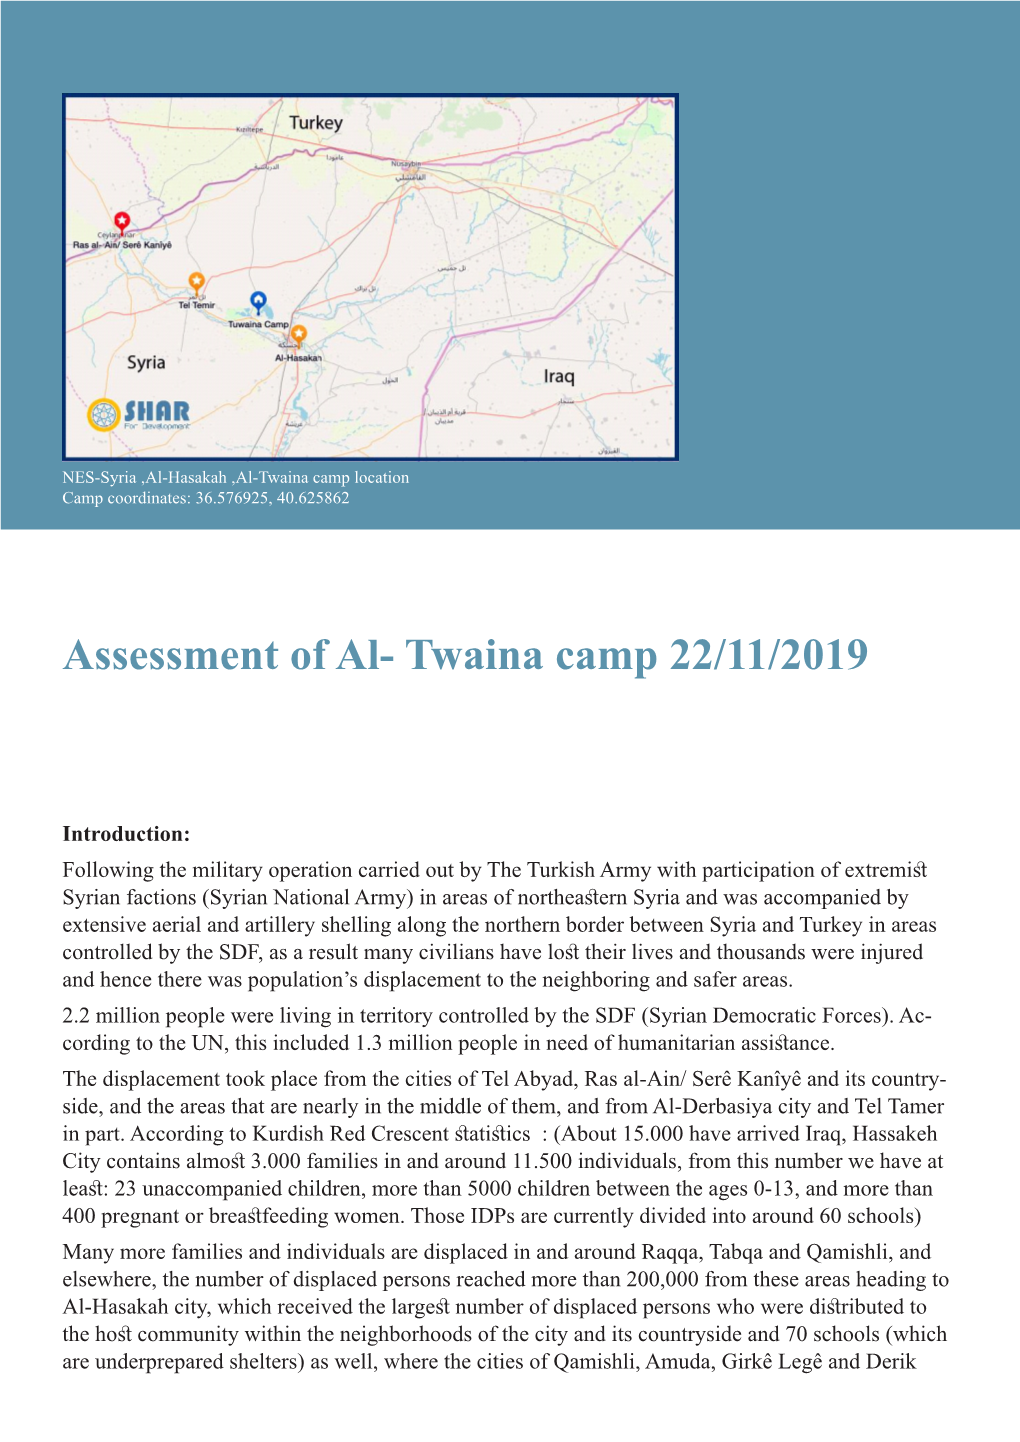 Assessment of Al- Twaina Camp 22/11/2019